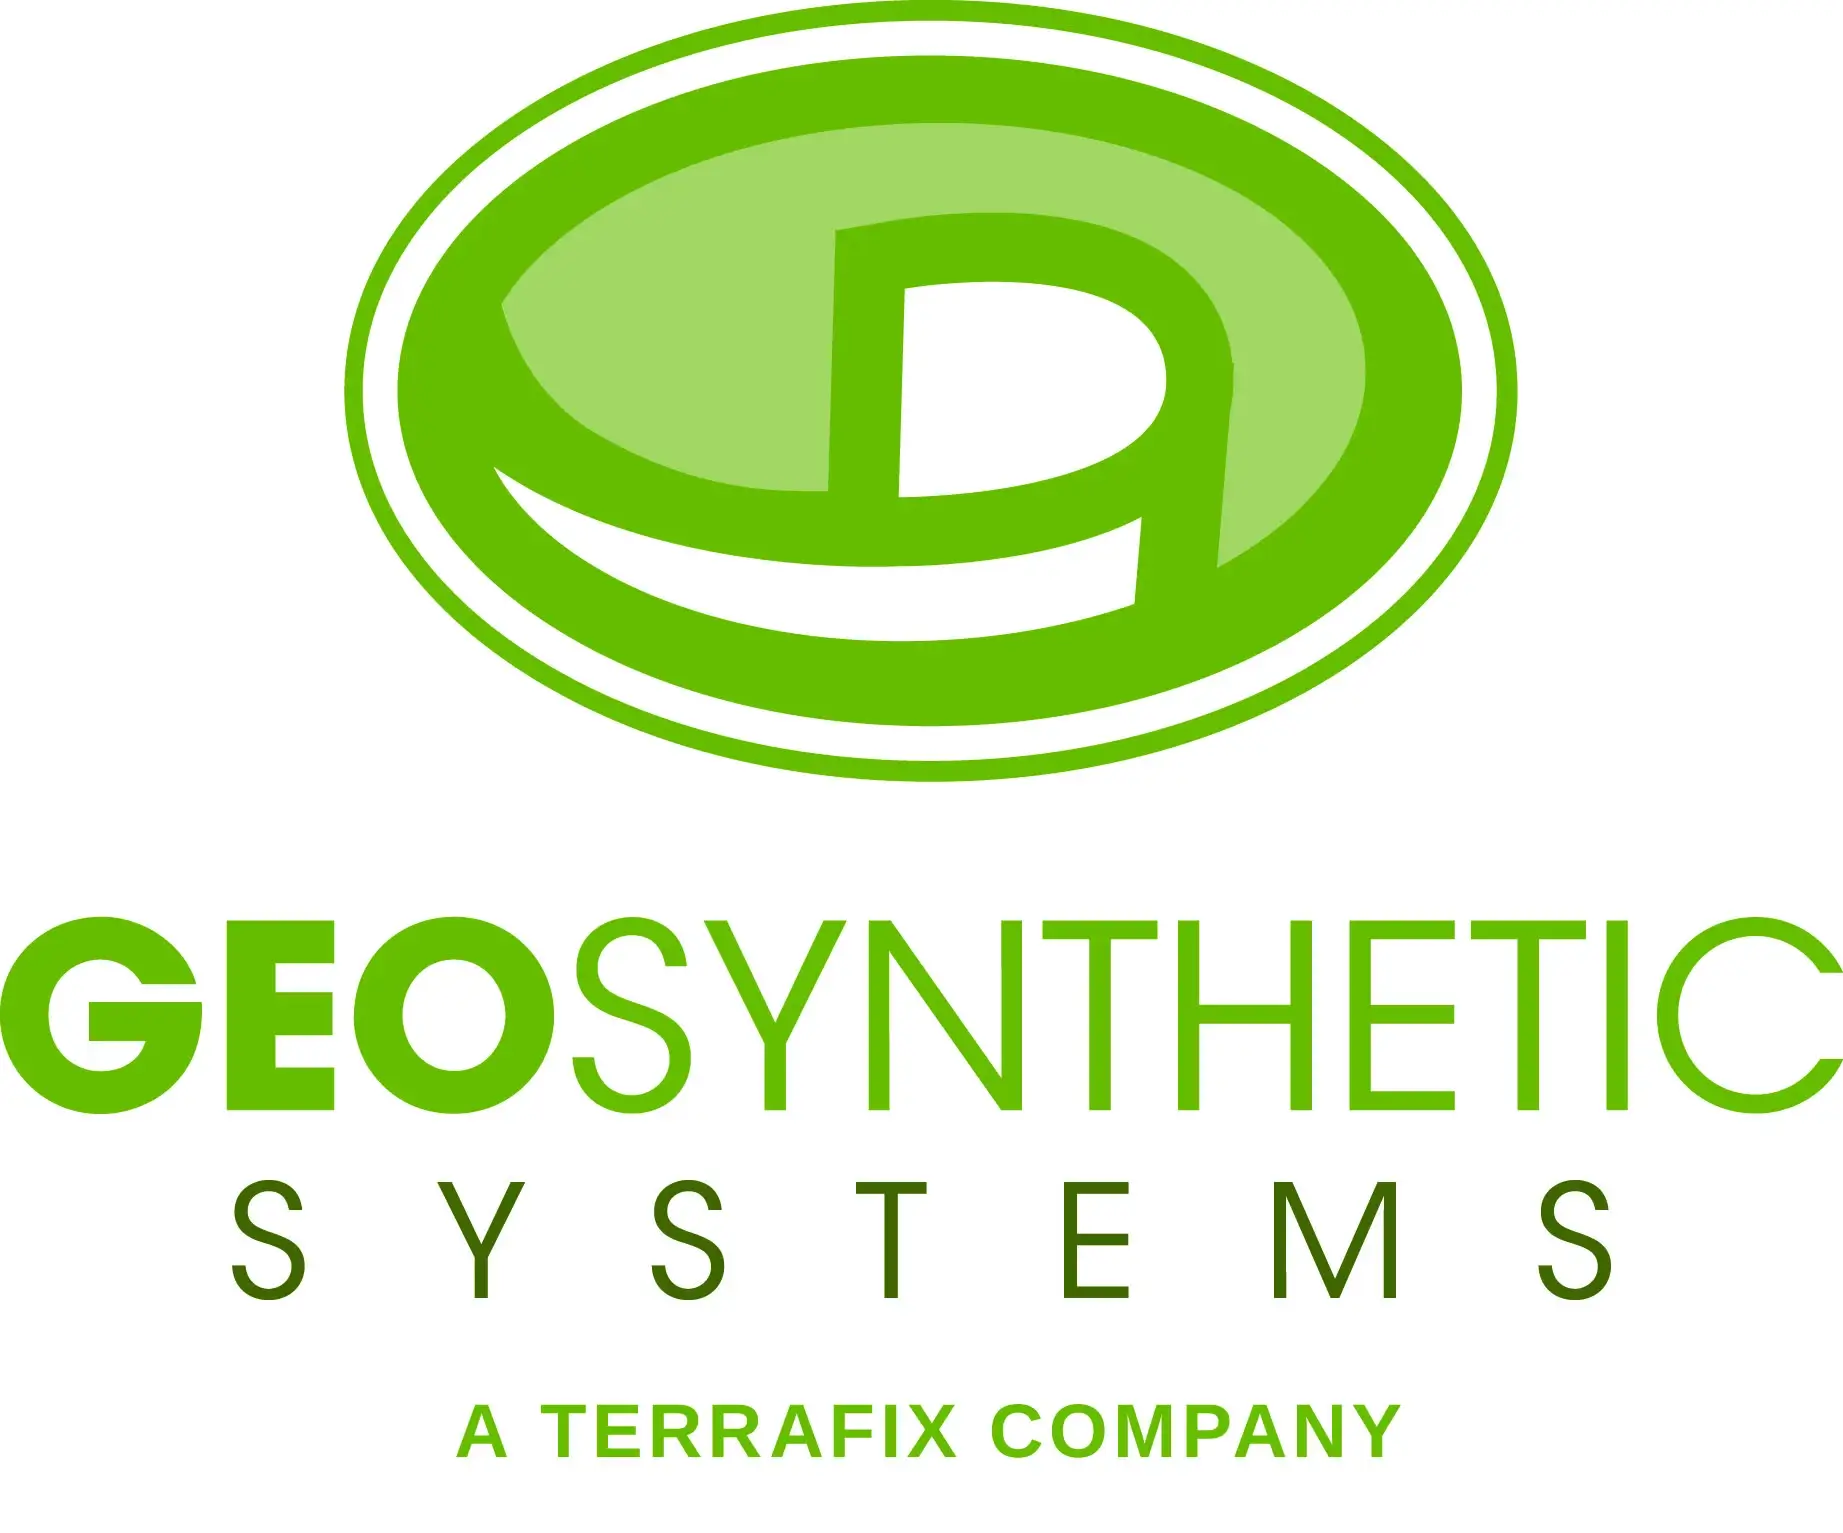 geosyntheticsystems logo